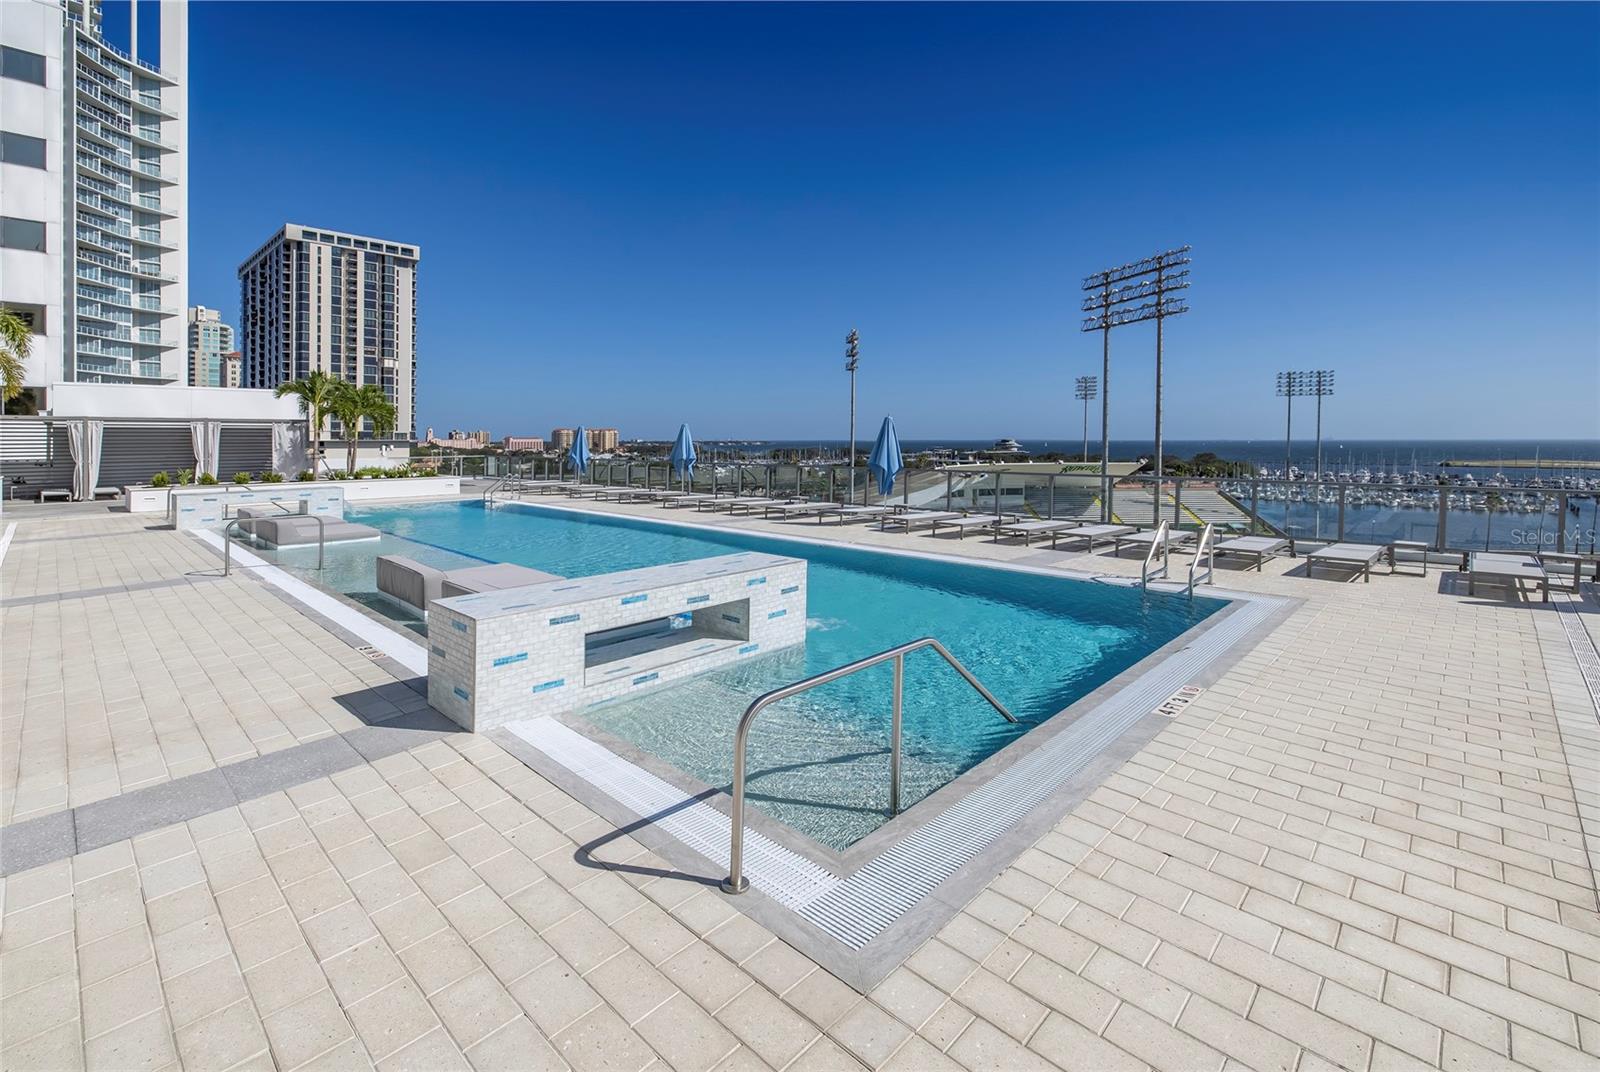 Resort Style Pool Deck